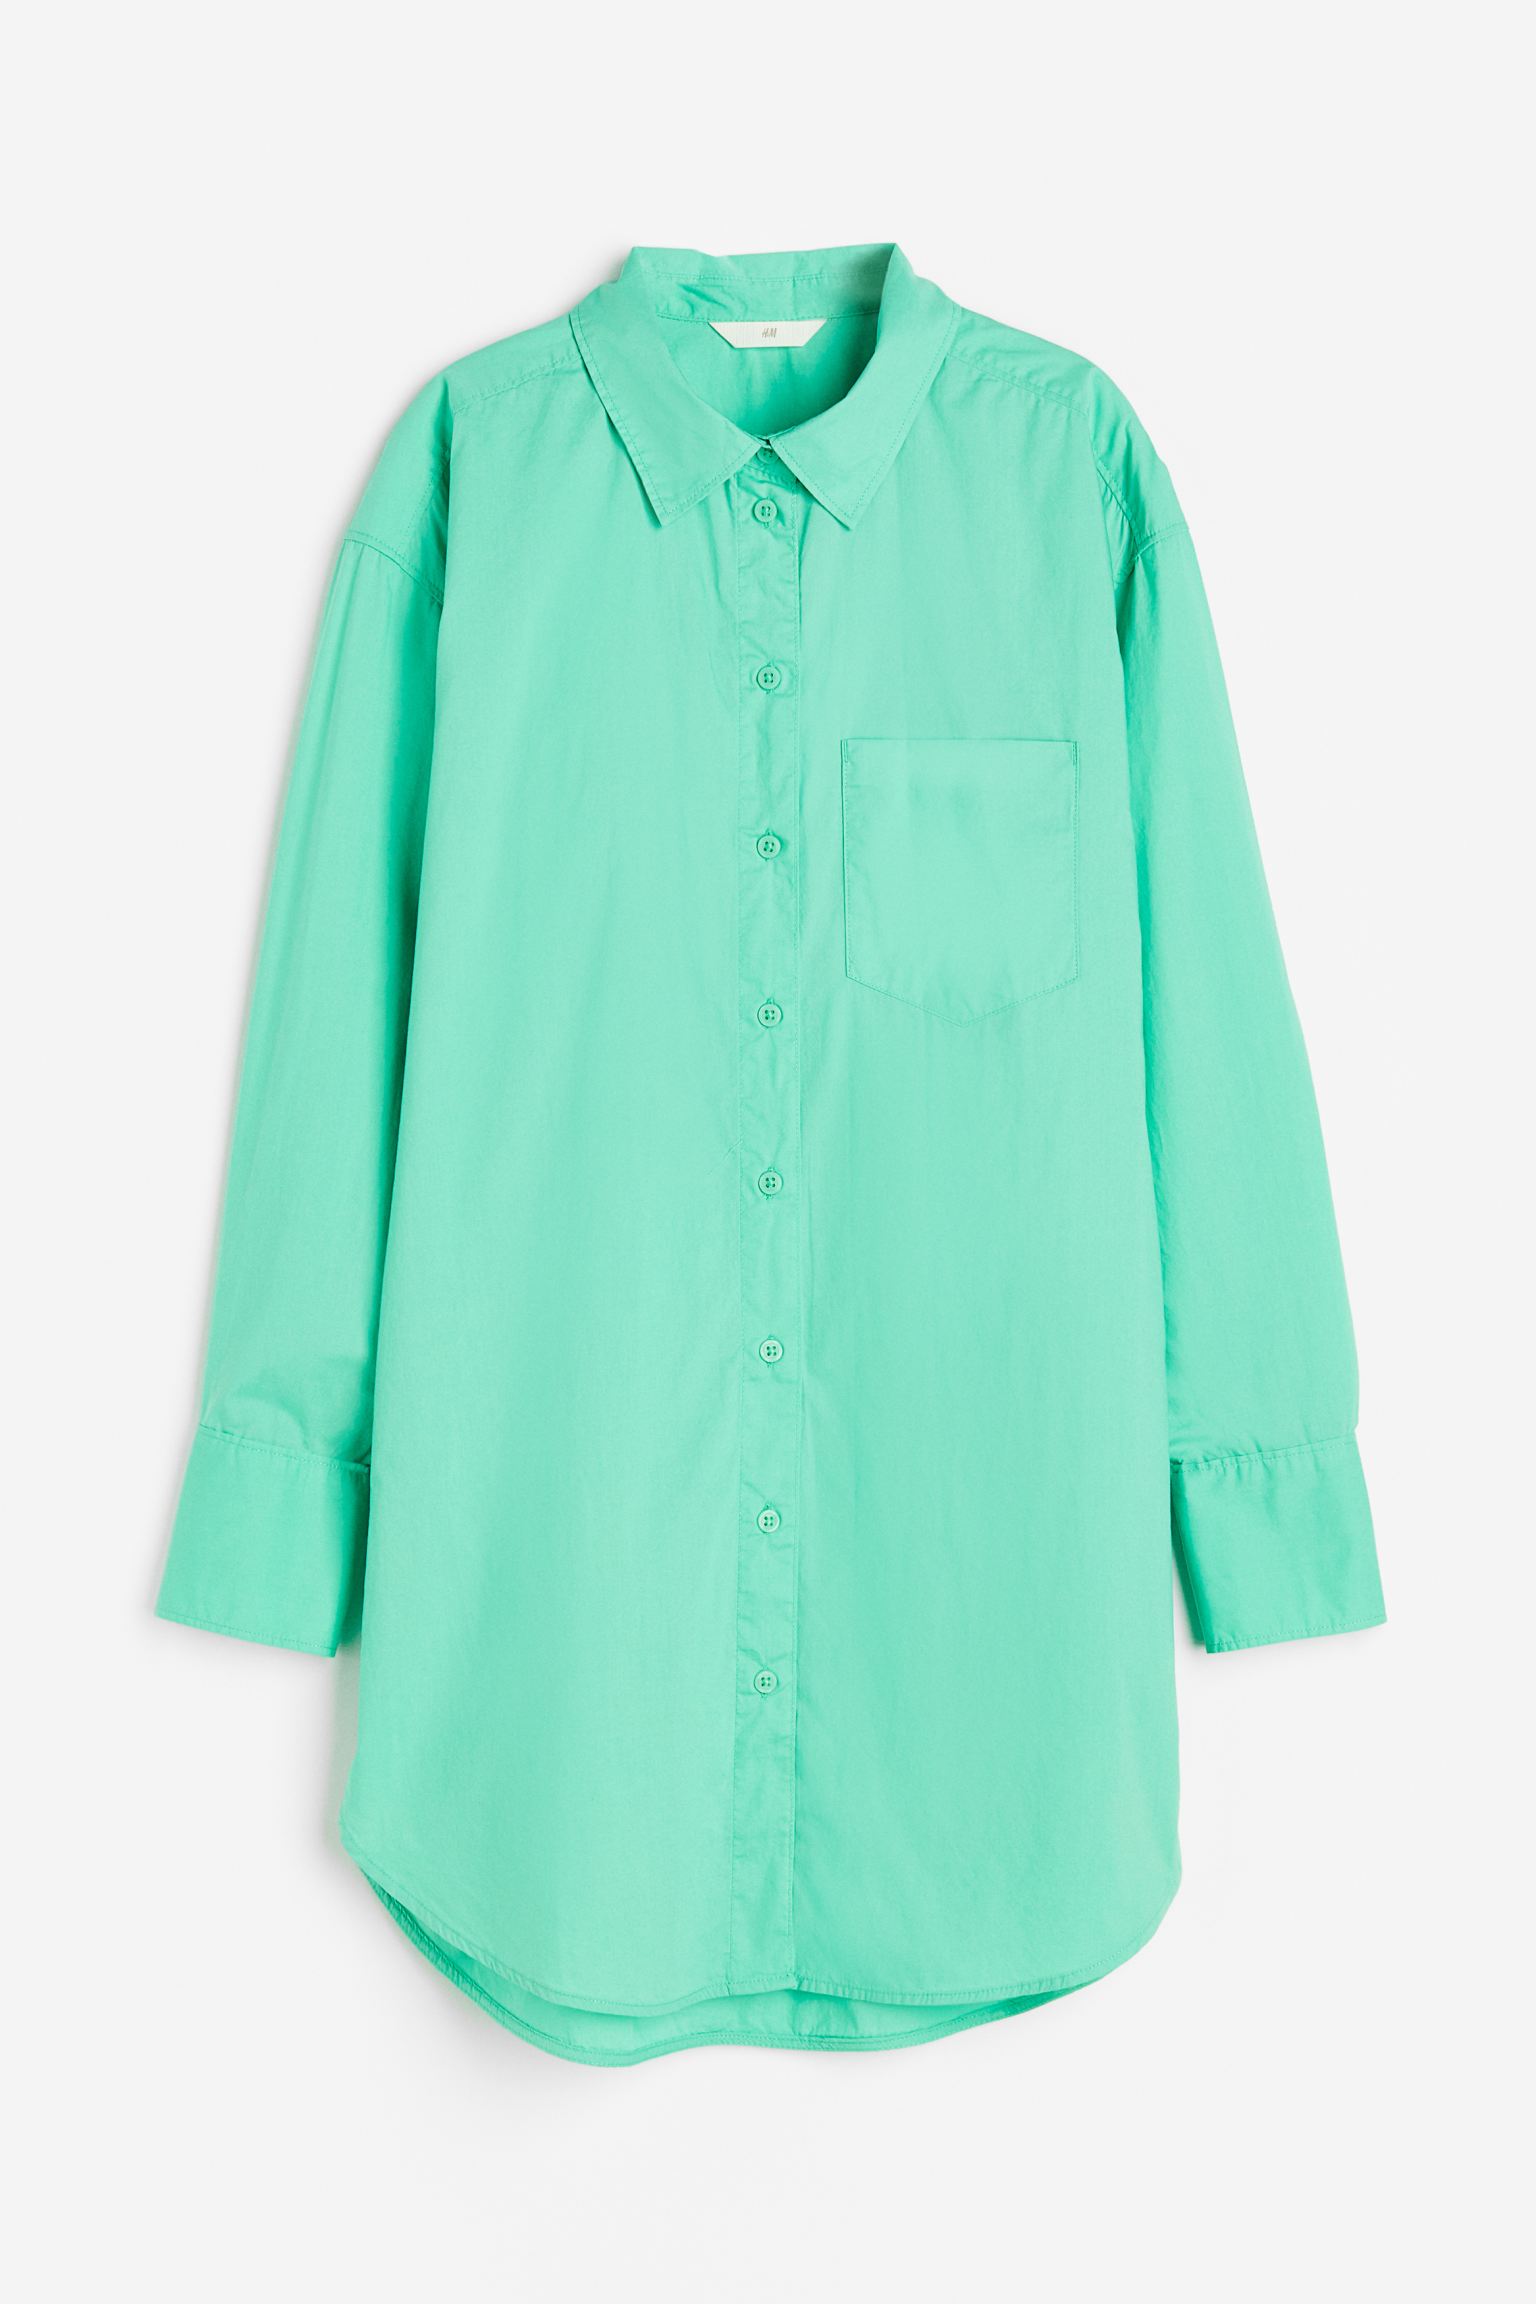 Рубашка женская H&M 1128740004 зеленая L (доставка из-за рубежа)